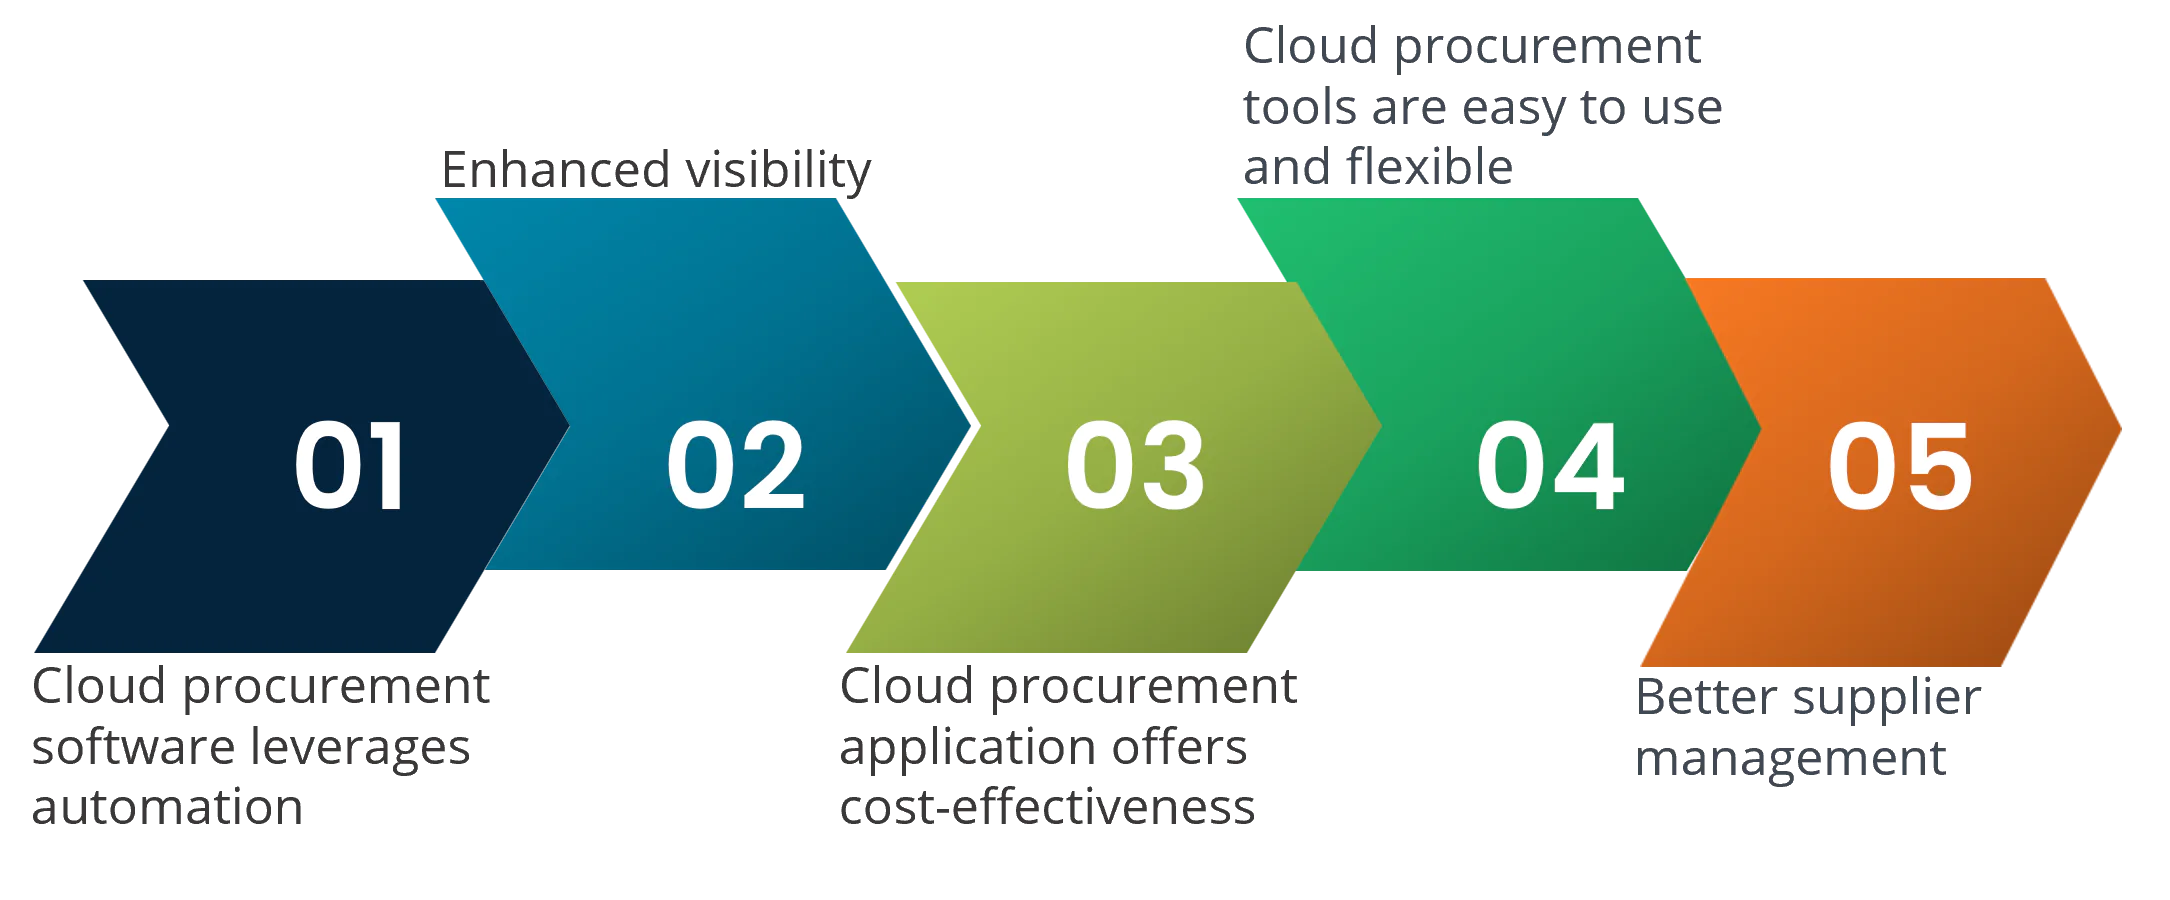 Cloud procurement benefits